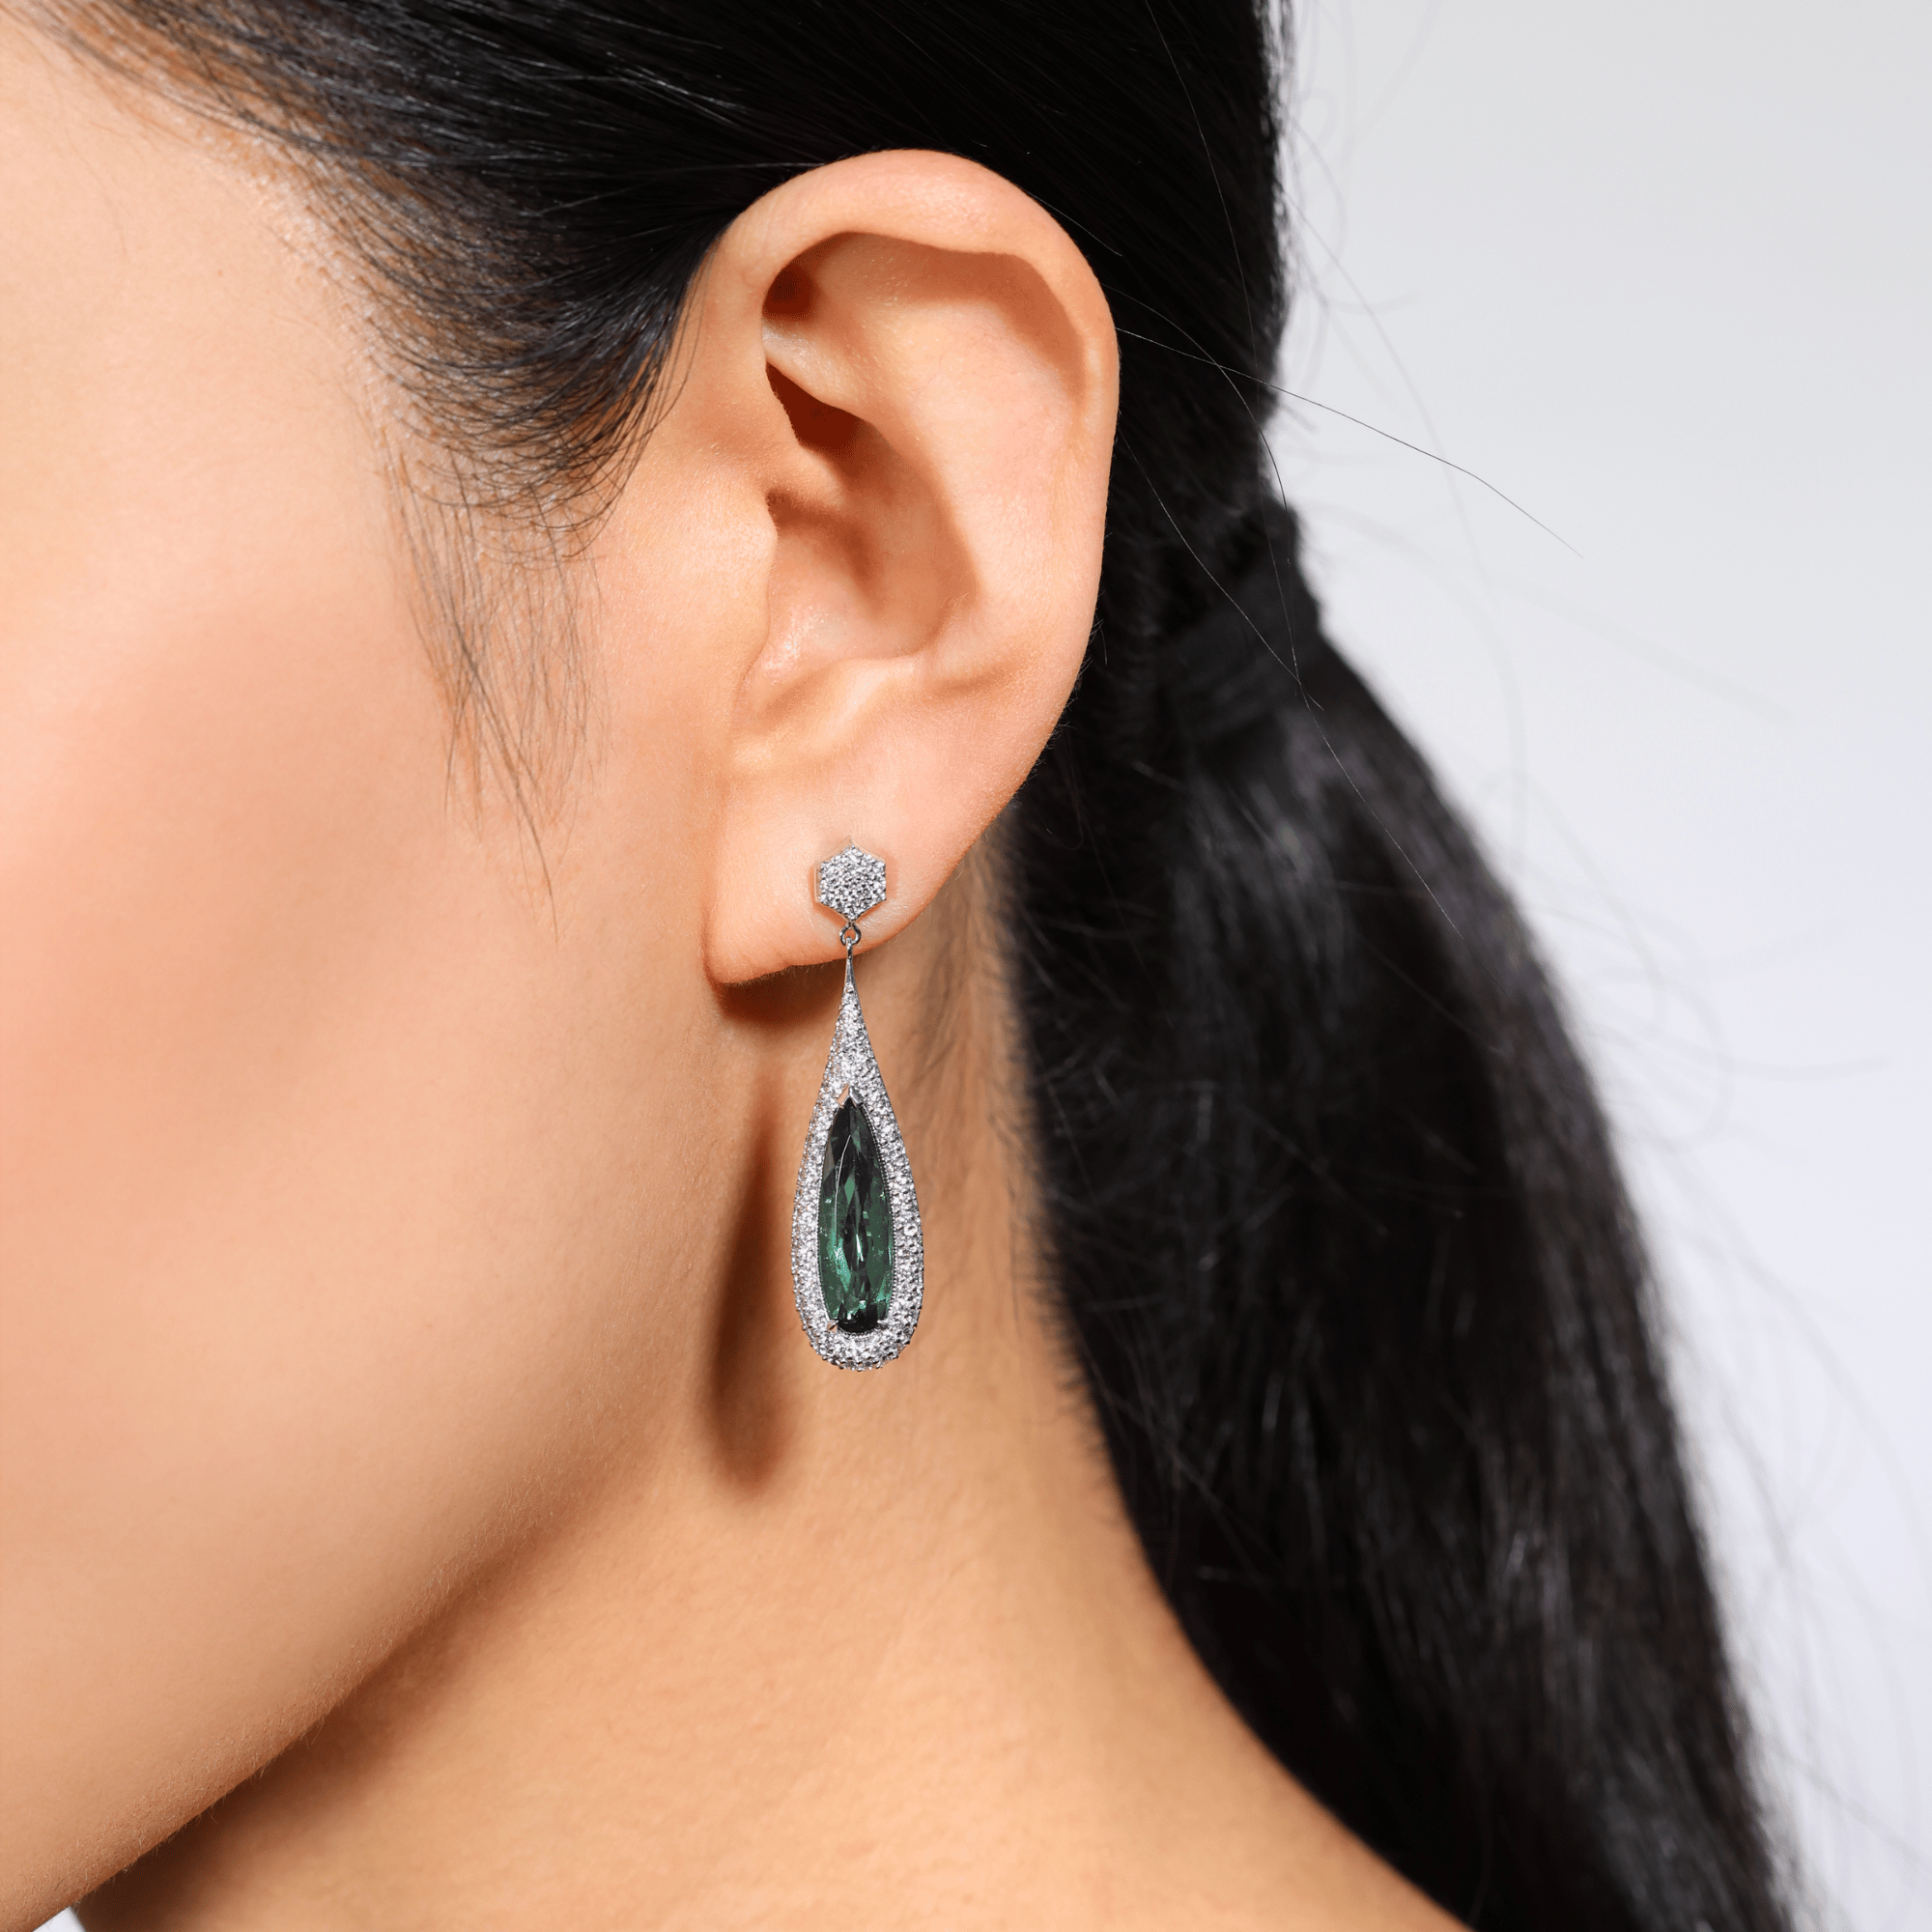 Green Tourmaline & Pavé Set Diamond Drop Earrings